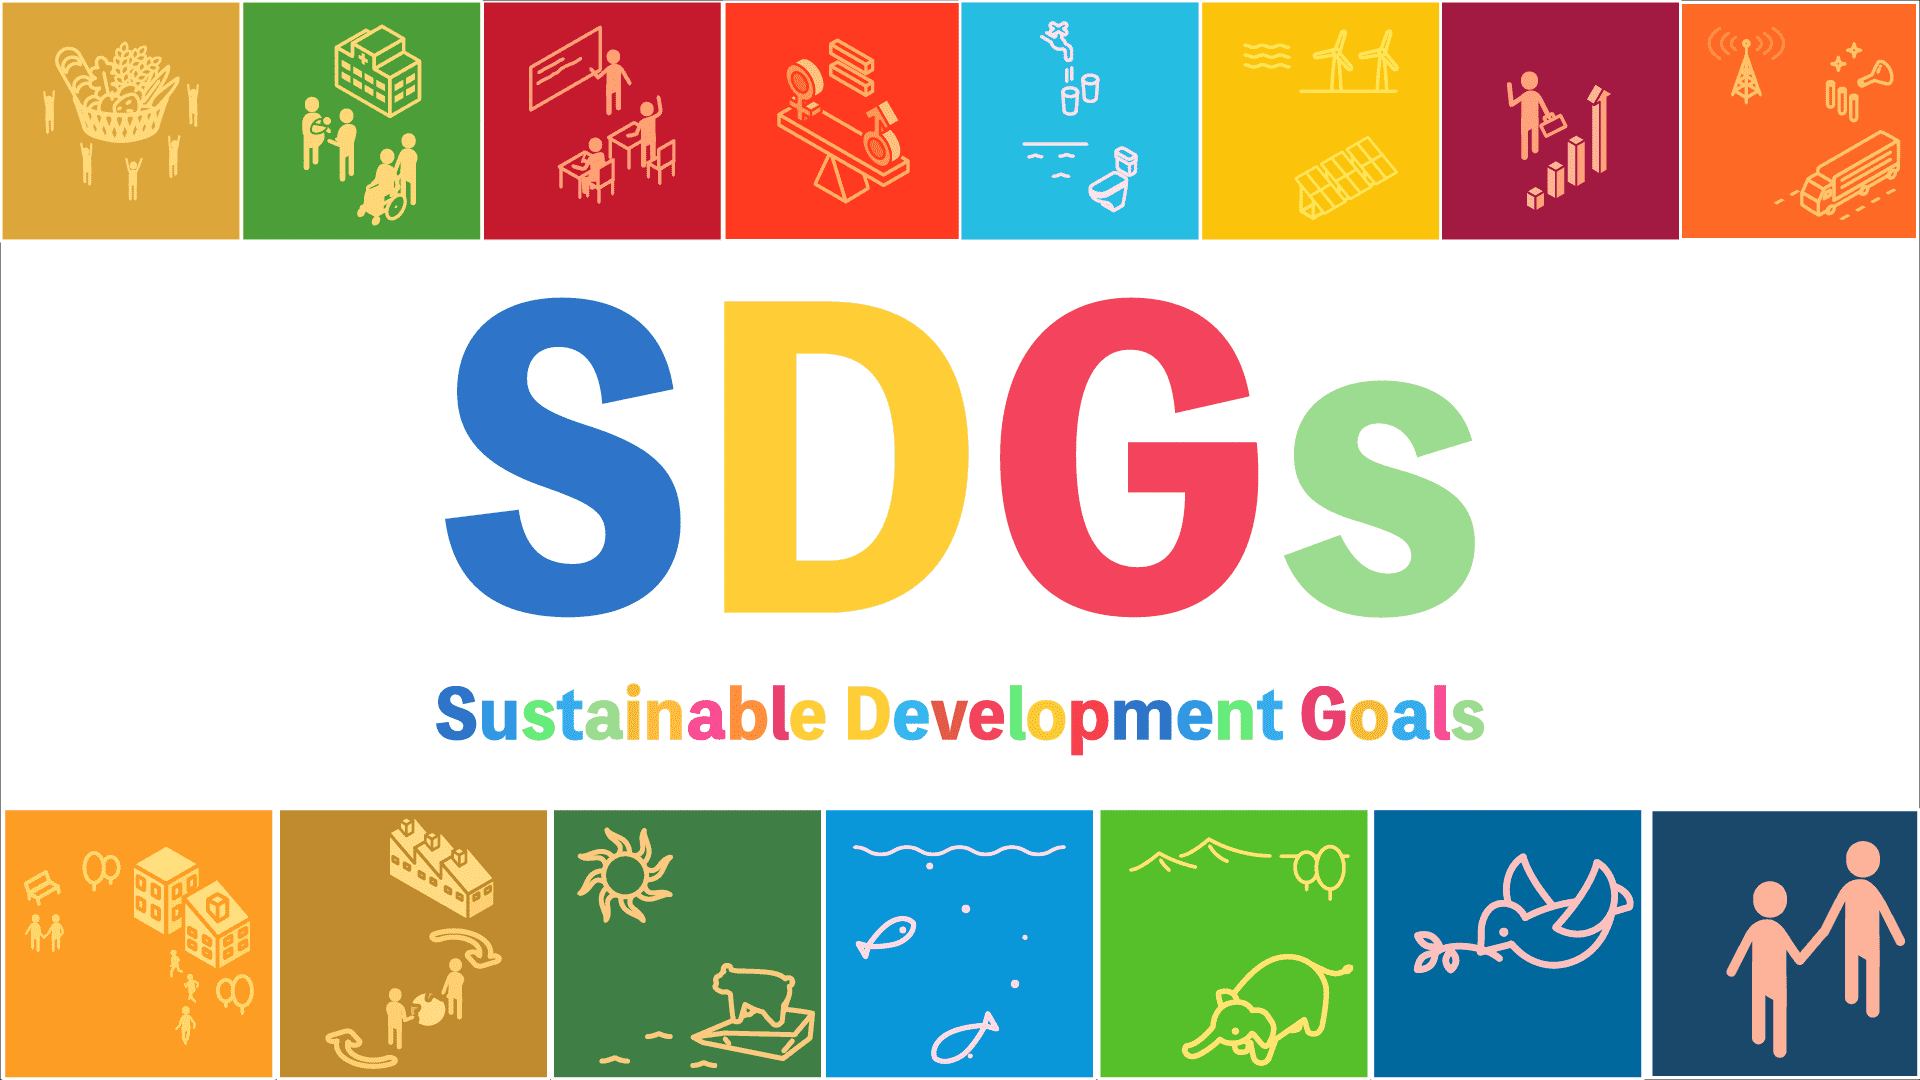 SDGs探究キャンプ [5歳児にSDGsを伝える実践ワークショップ]